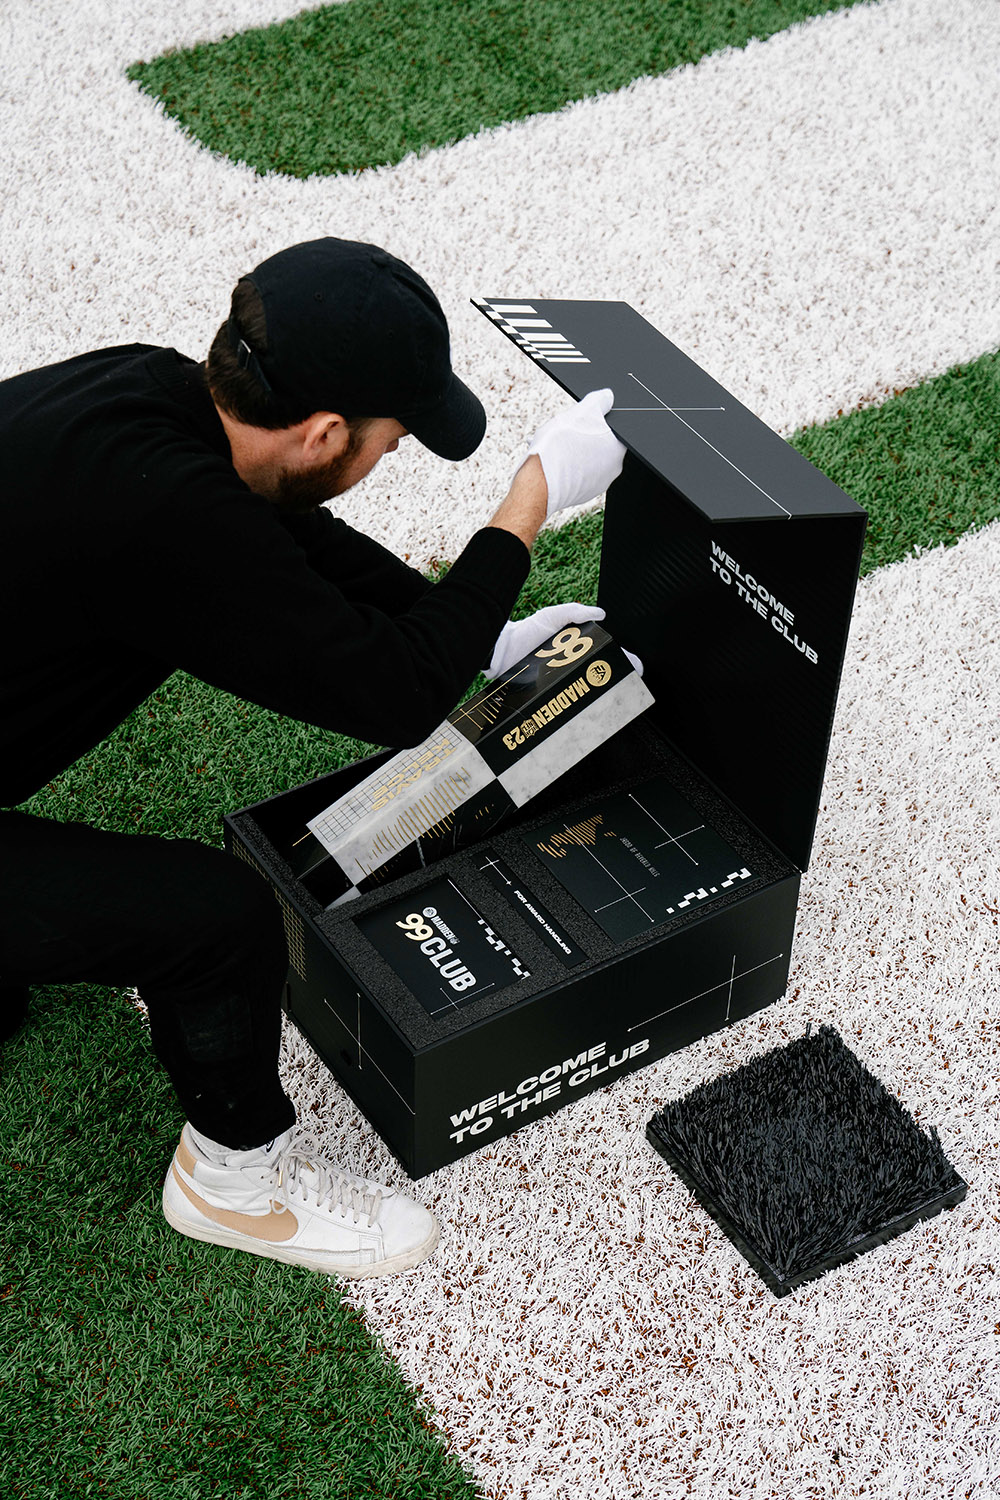 Brian Madden packs a box with a Madden NFL sculpture he made.